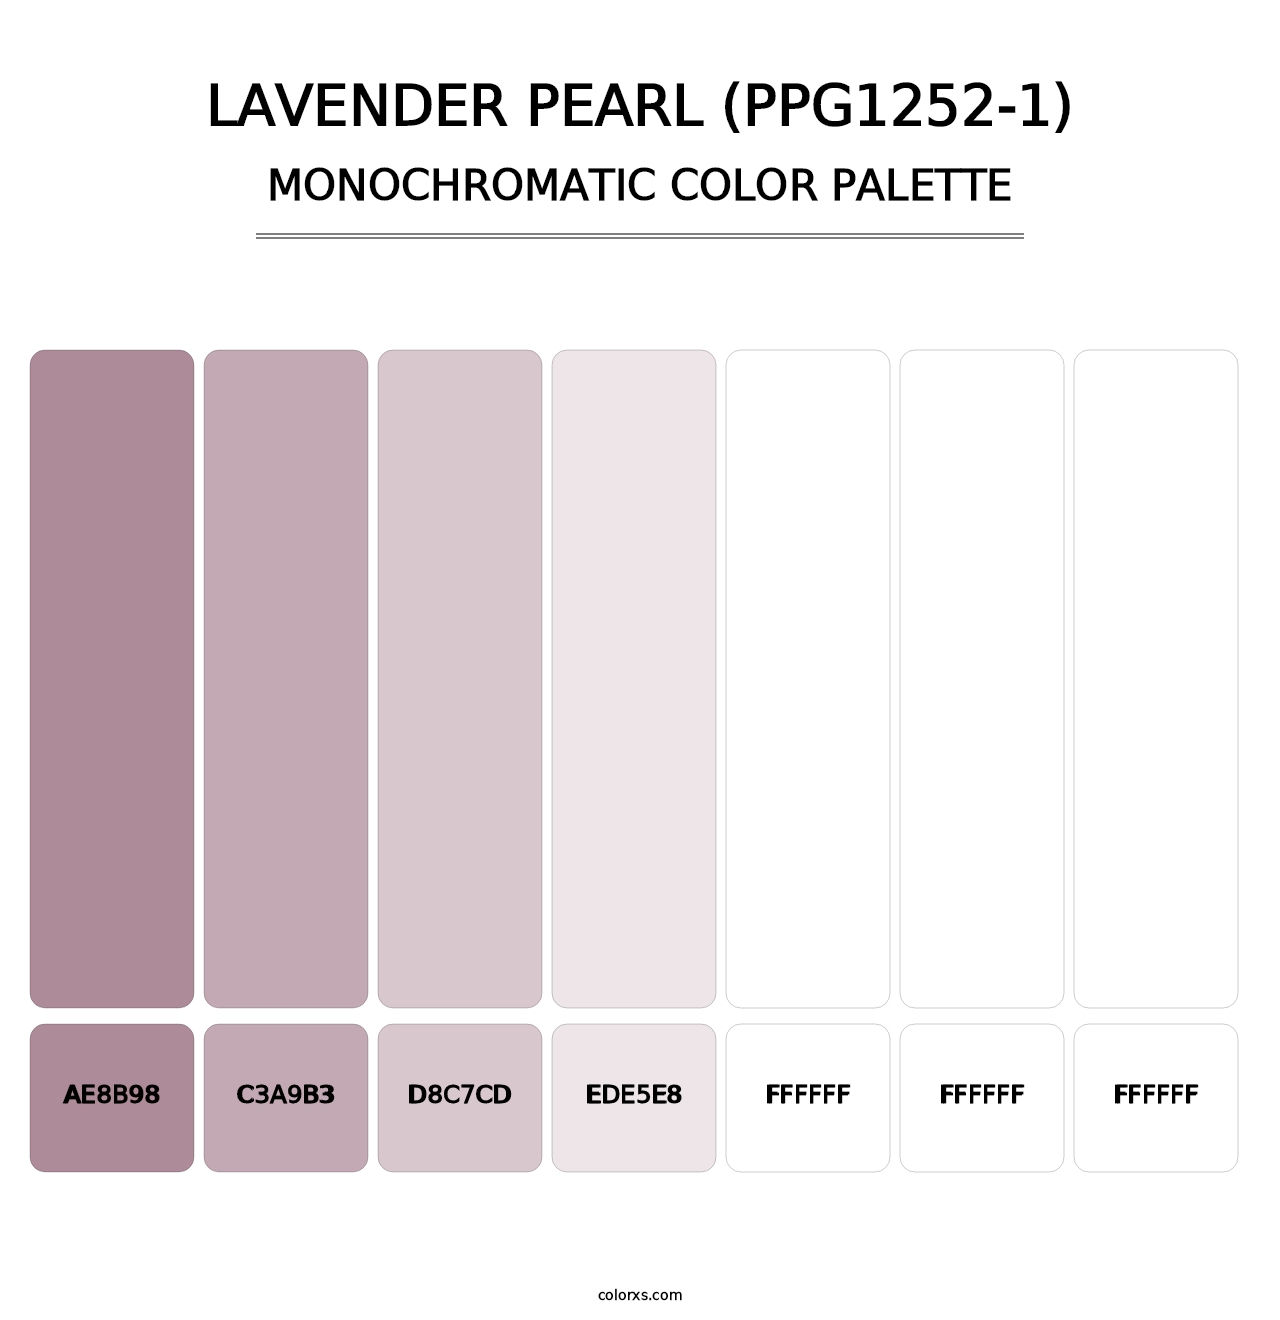 Lavender Pearl (PPG1252-1) - Monochromatic Color Palette